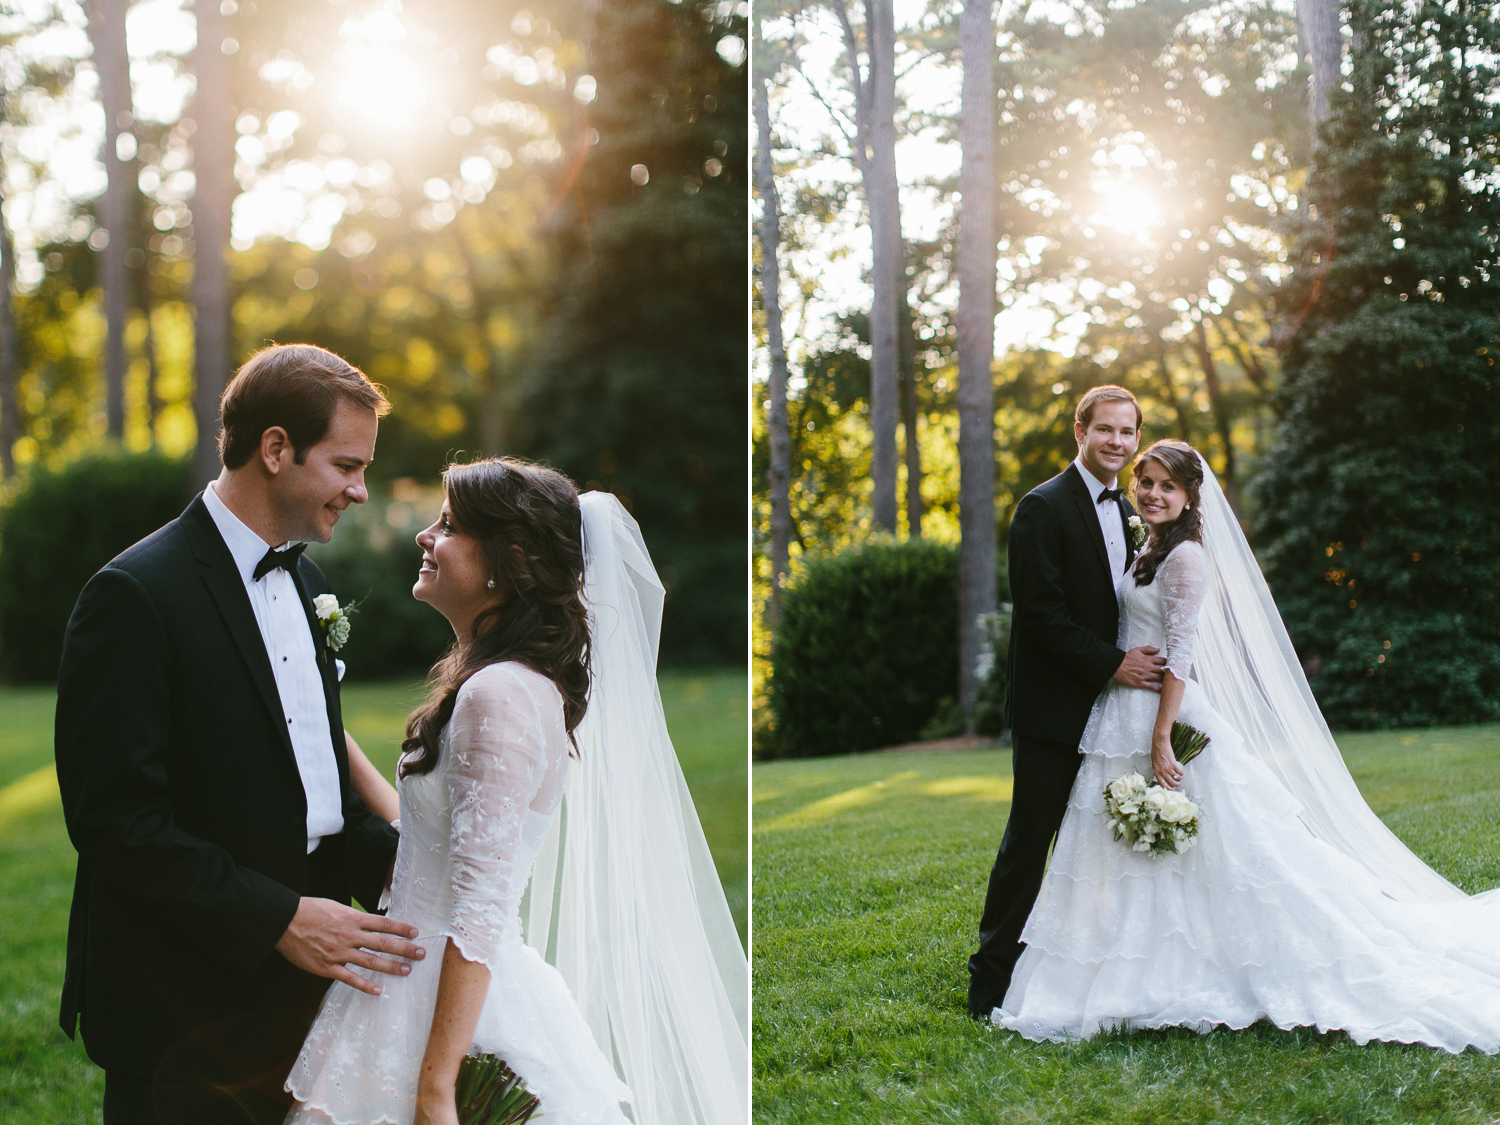 Amazing light bride and groom portraits